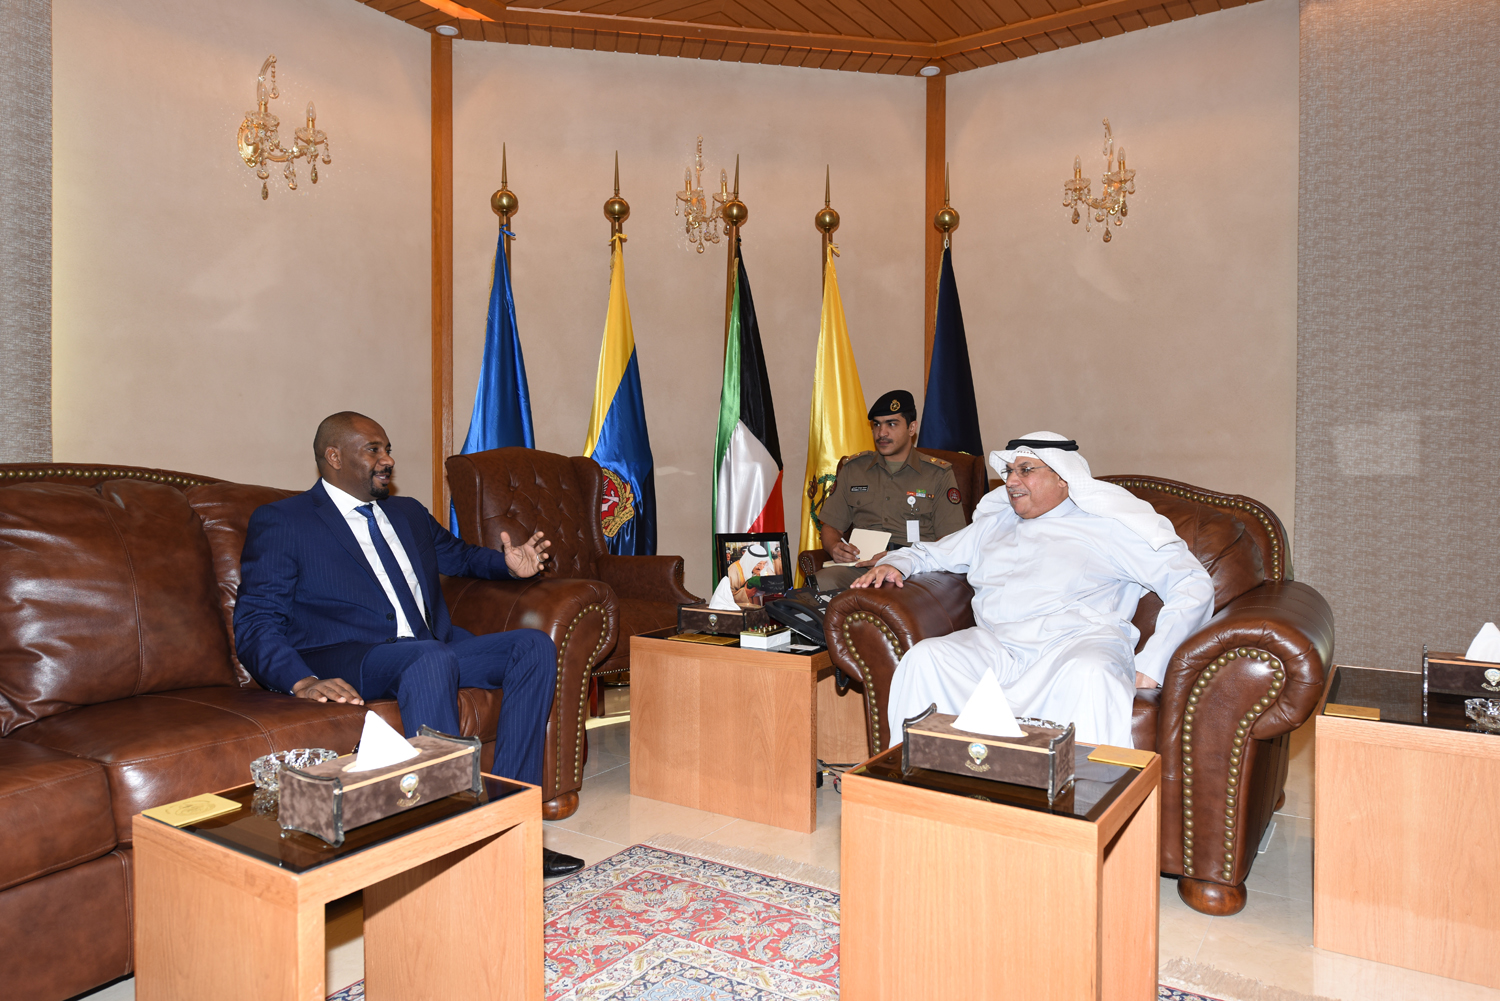 Deputy Prime Minister and Defense Minister Sheikh Khaled Al-Jarrah Al-Sabah meets with Chadian Ambassador to Kuwait Ahmed Agbash